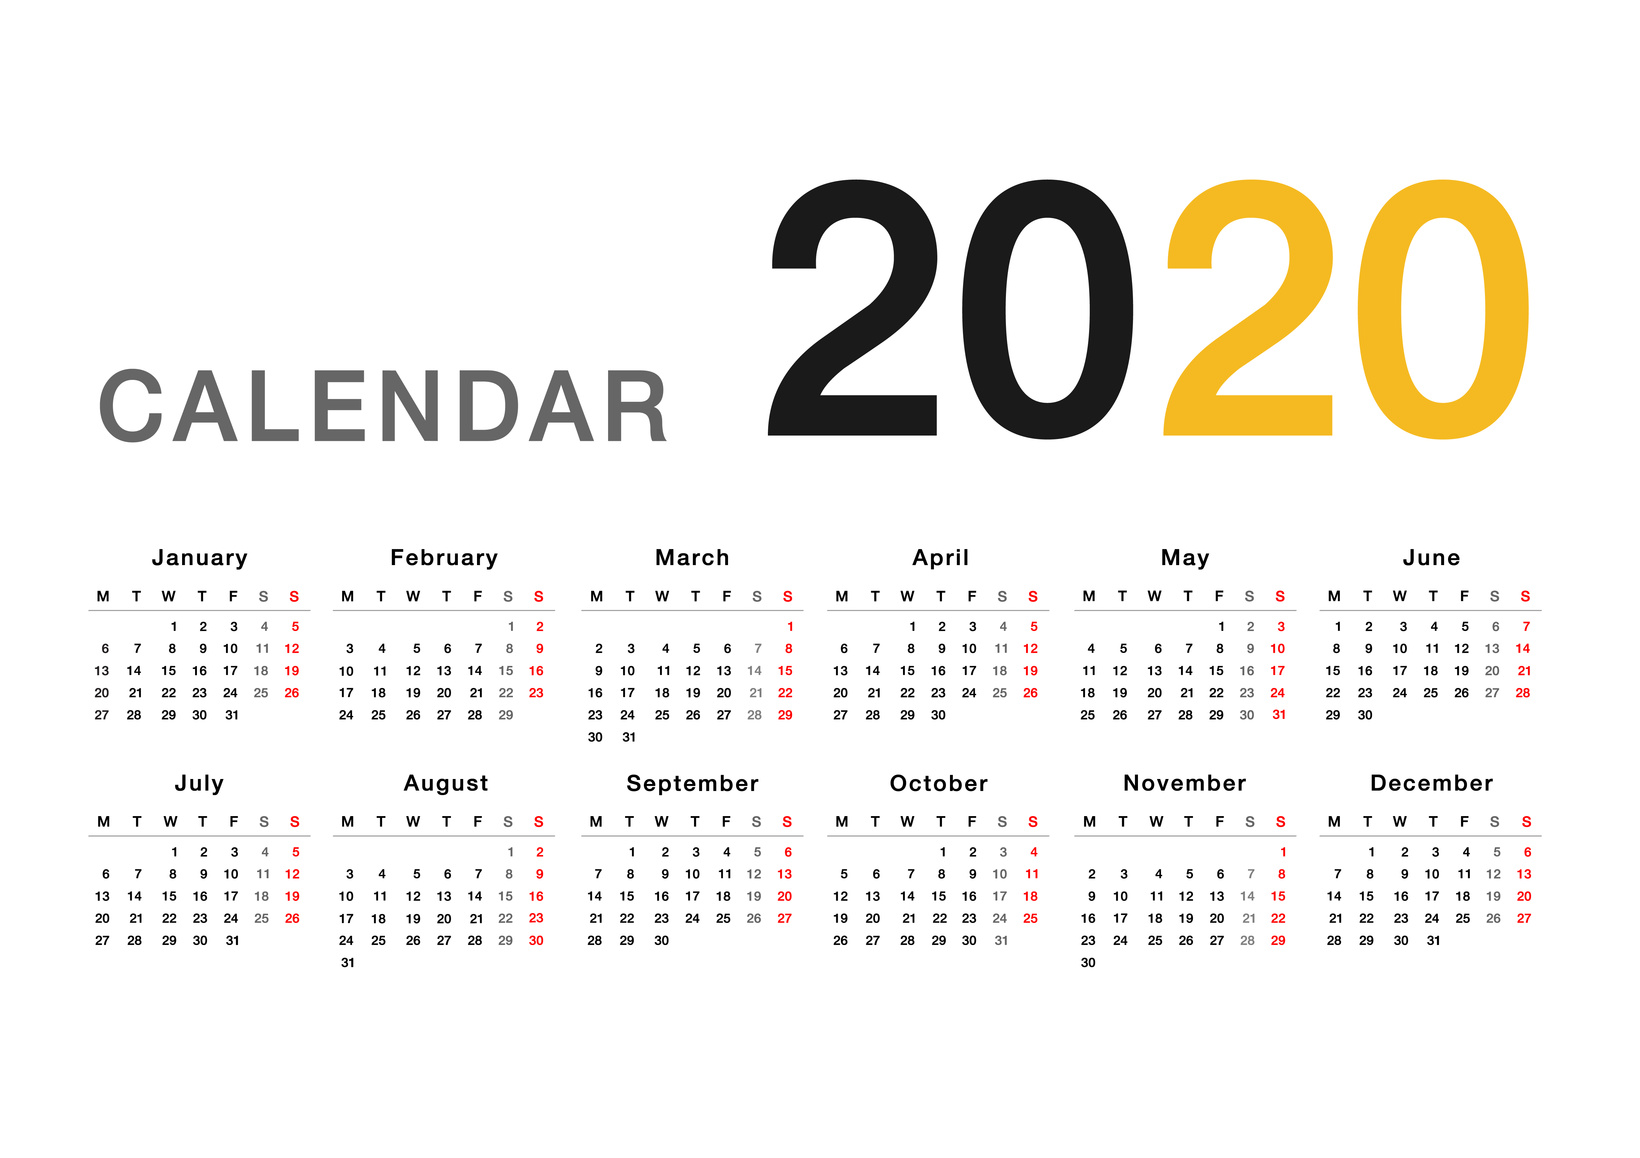 Calendar year 2020 